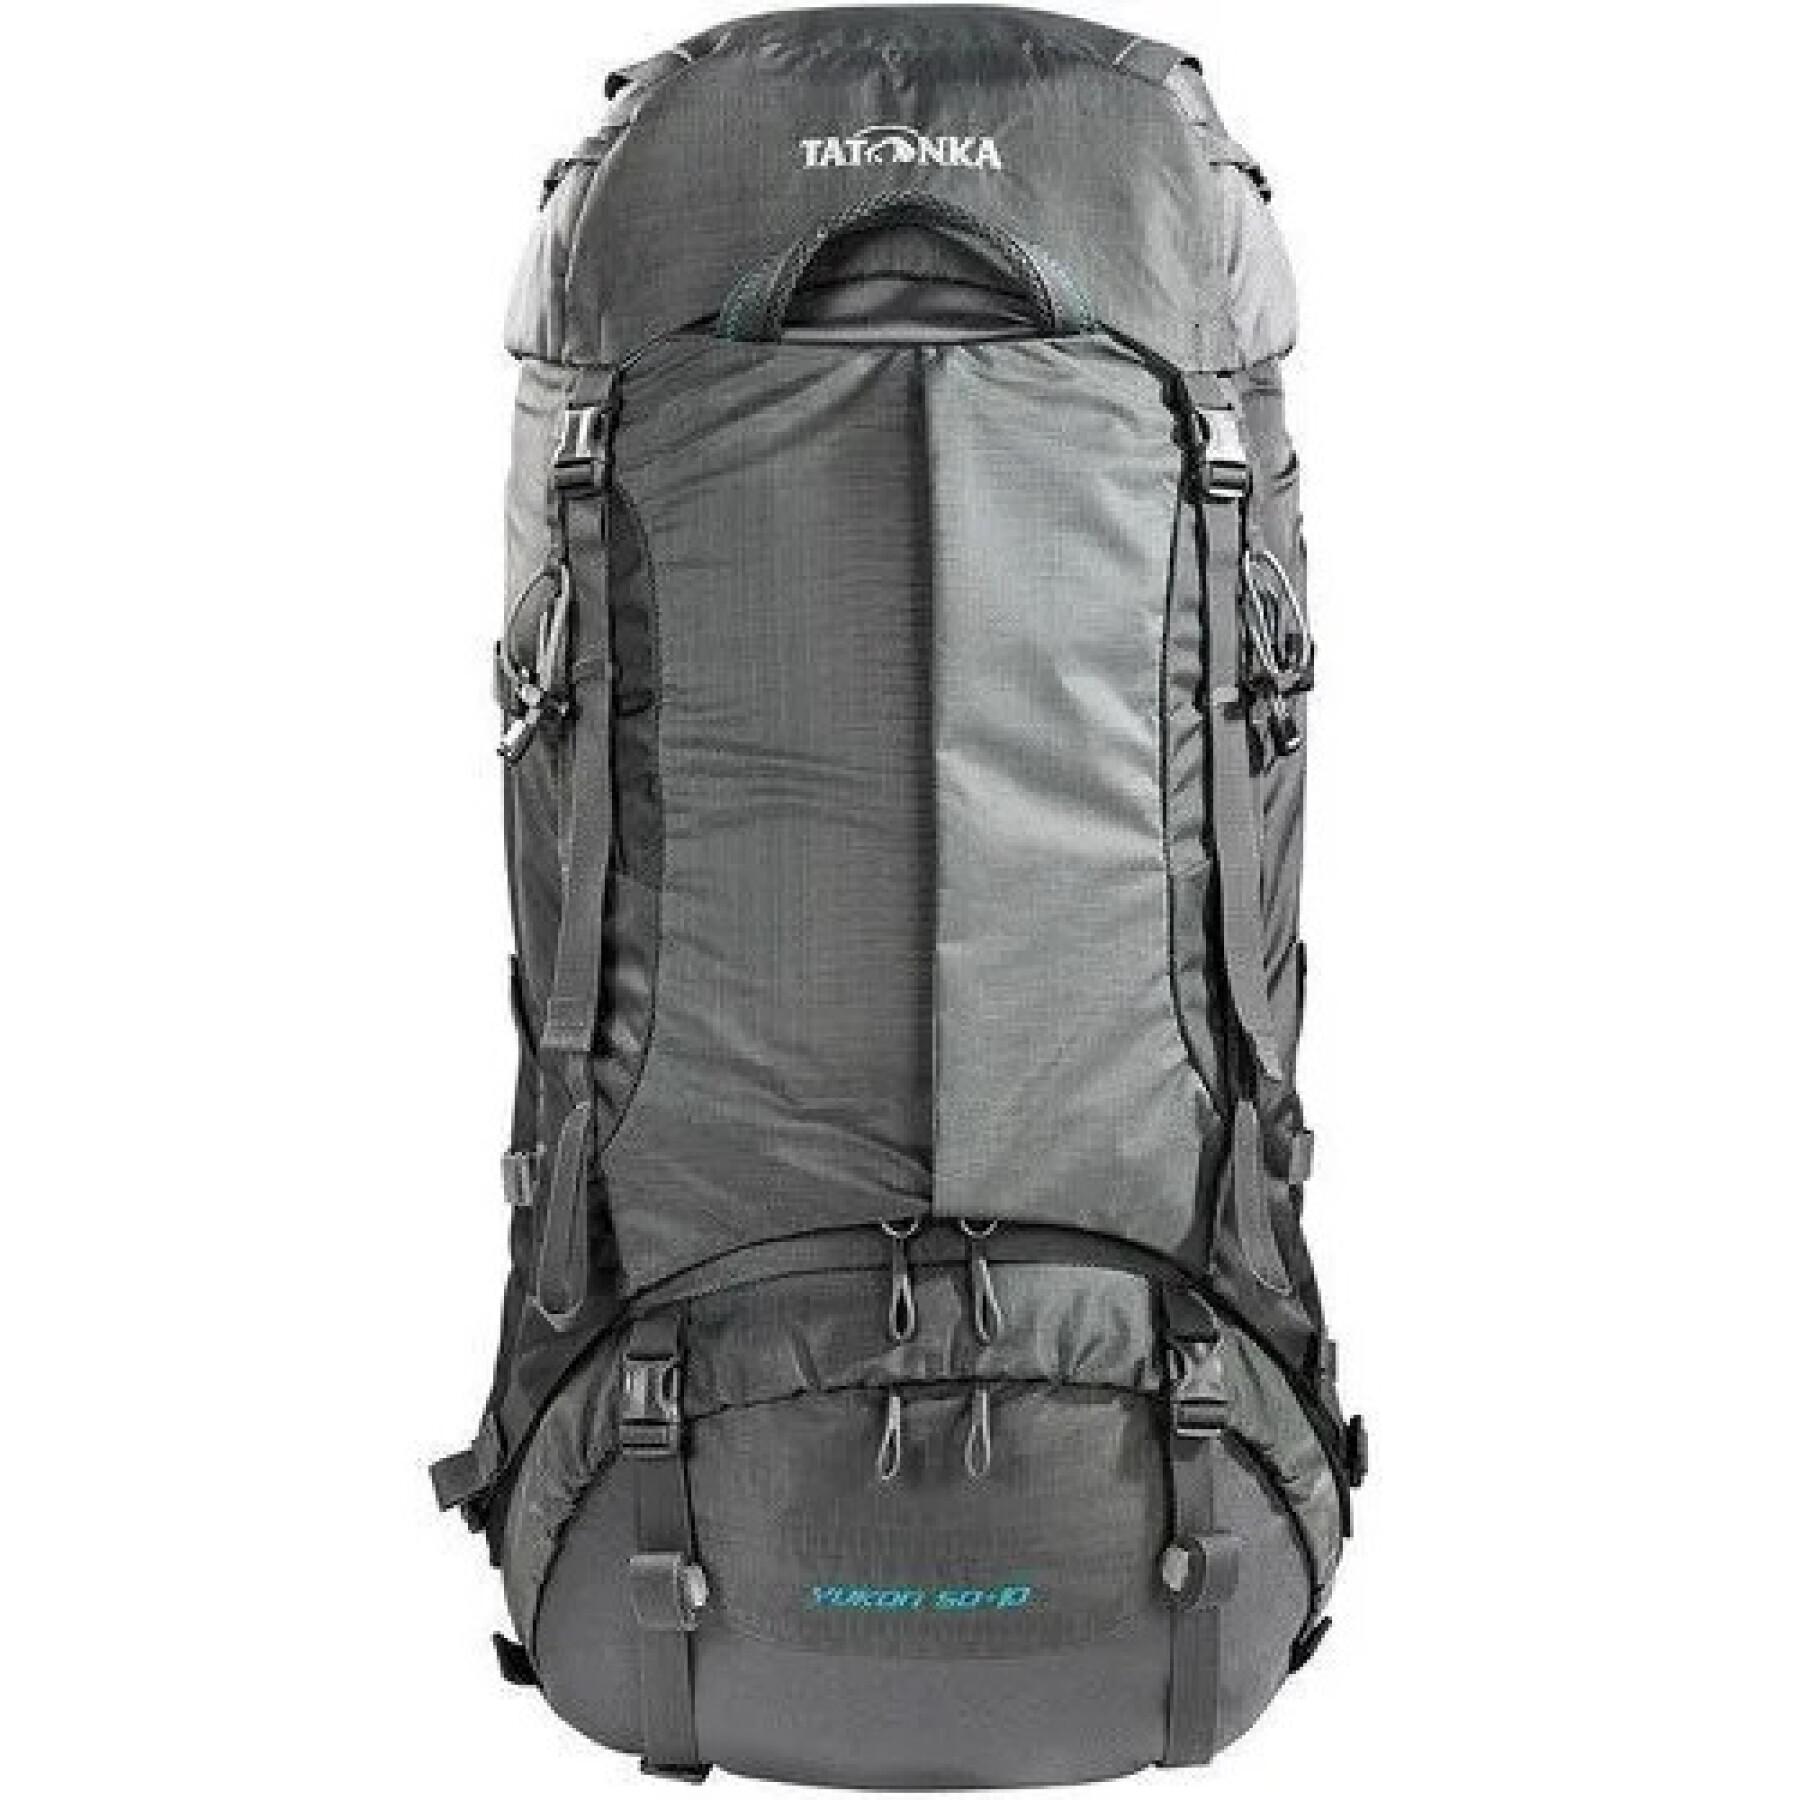 Backpack Tatonka Yukon